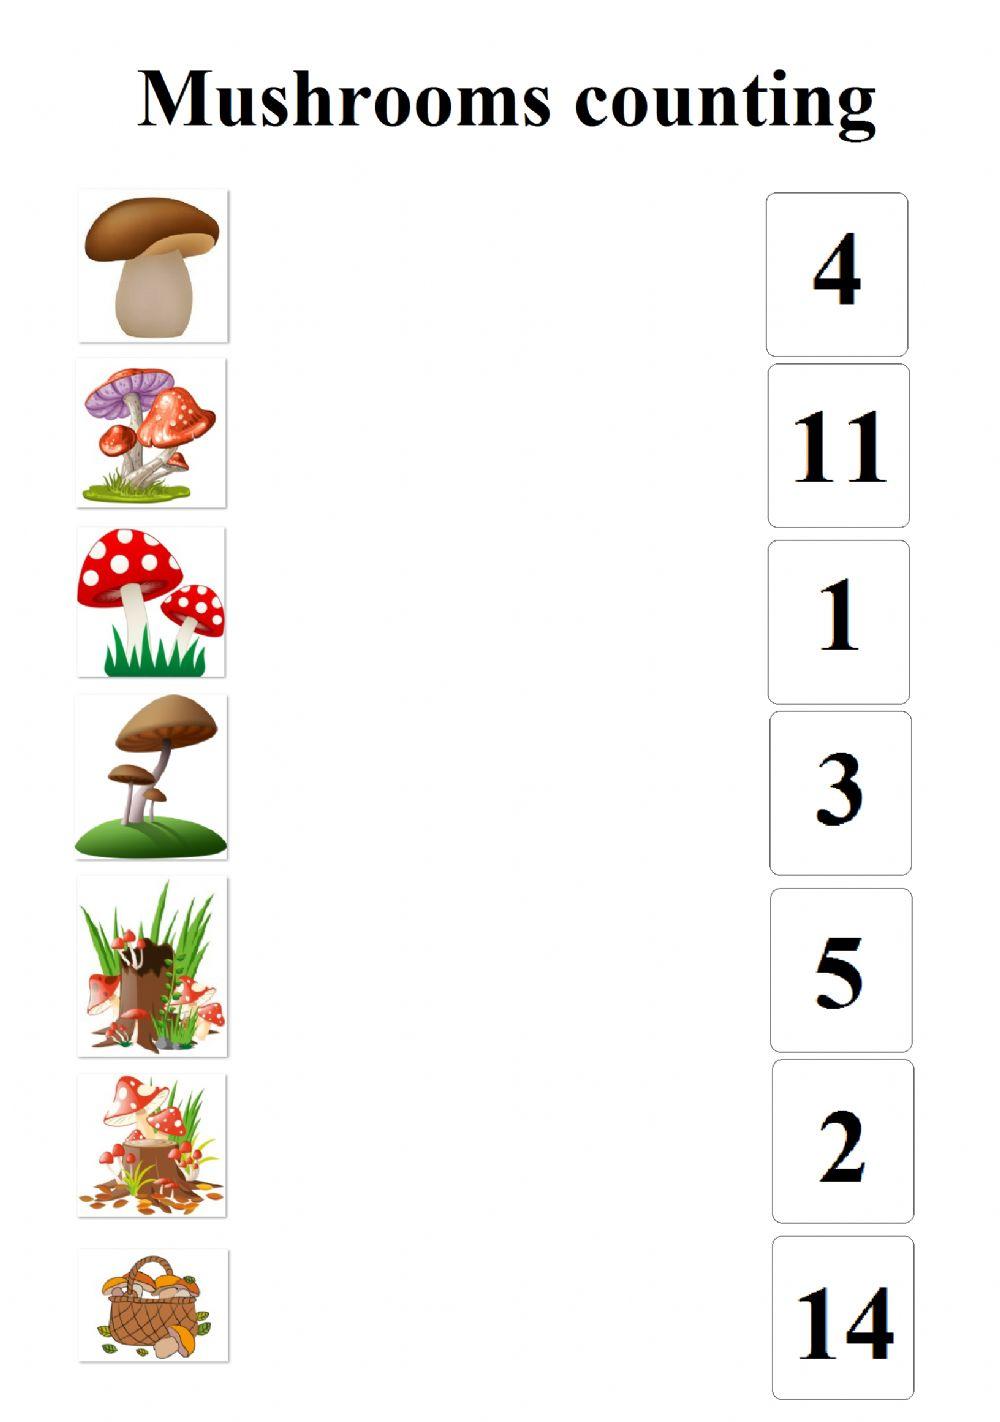 Mushrooms counting